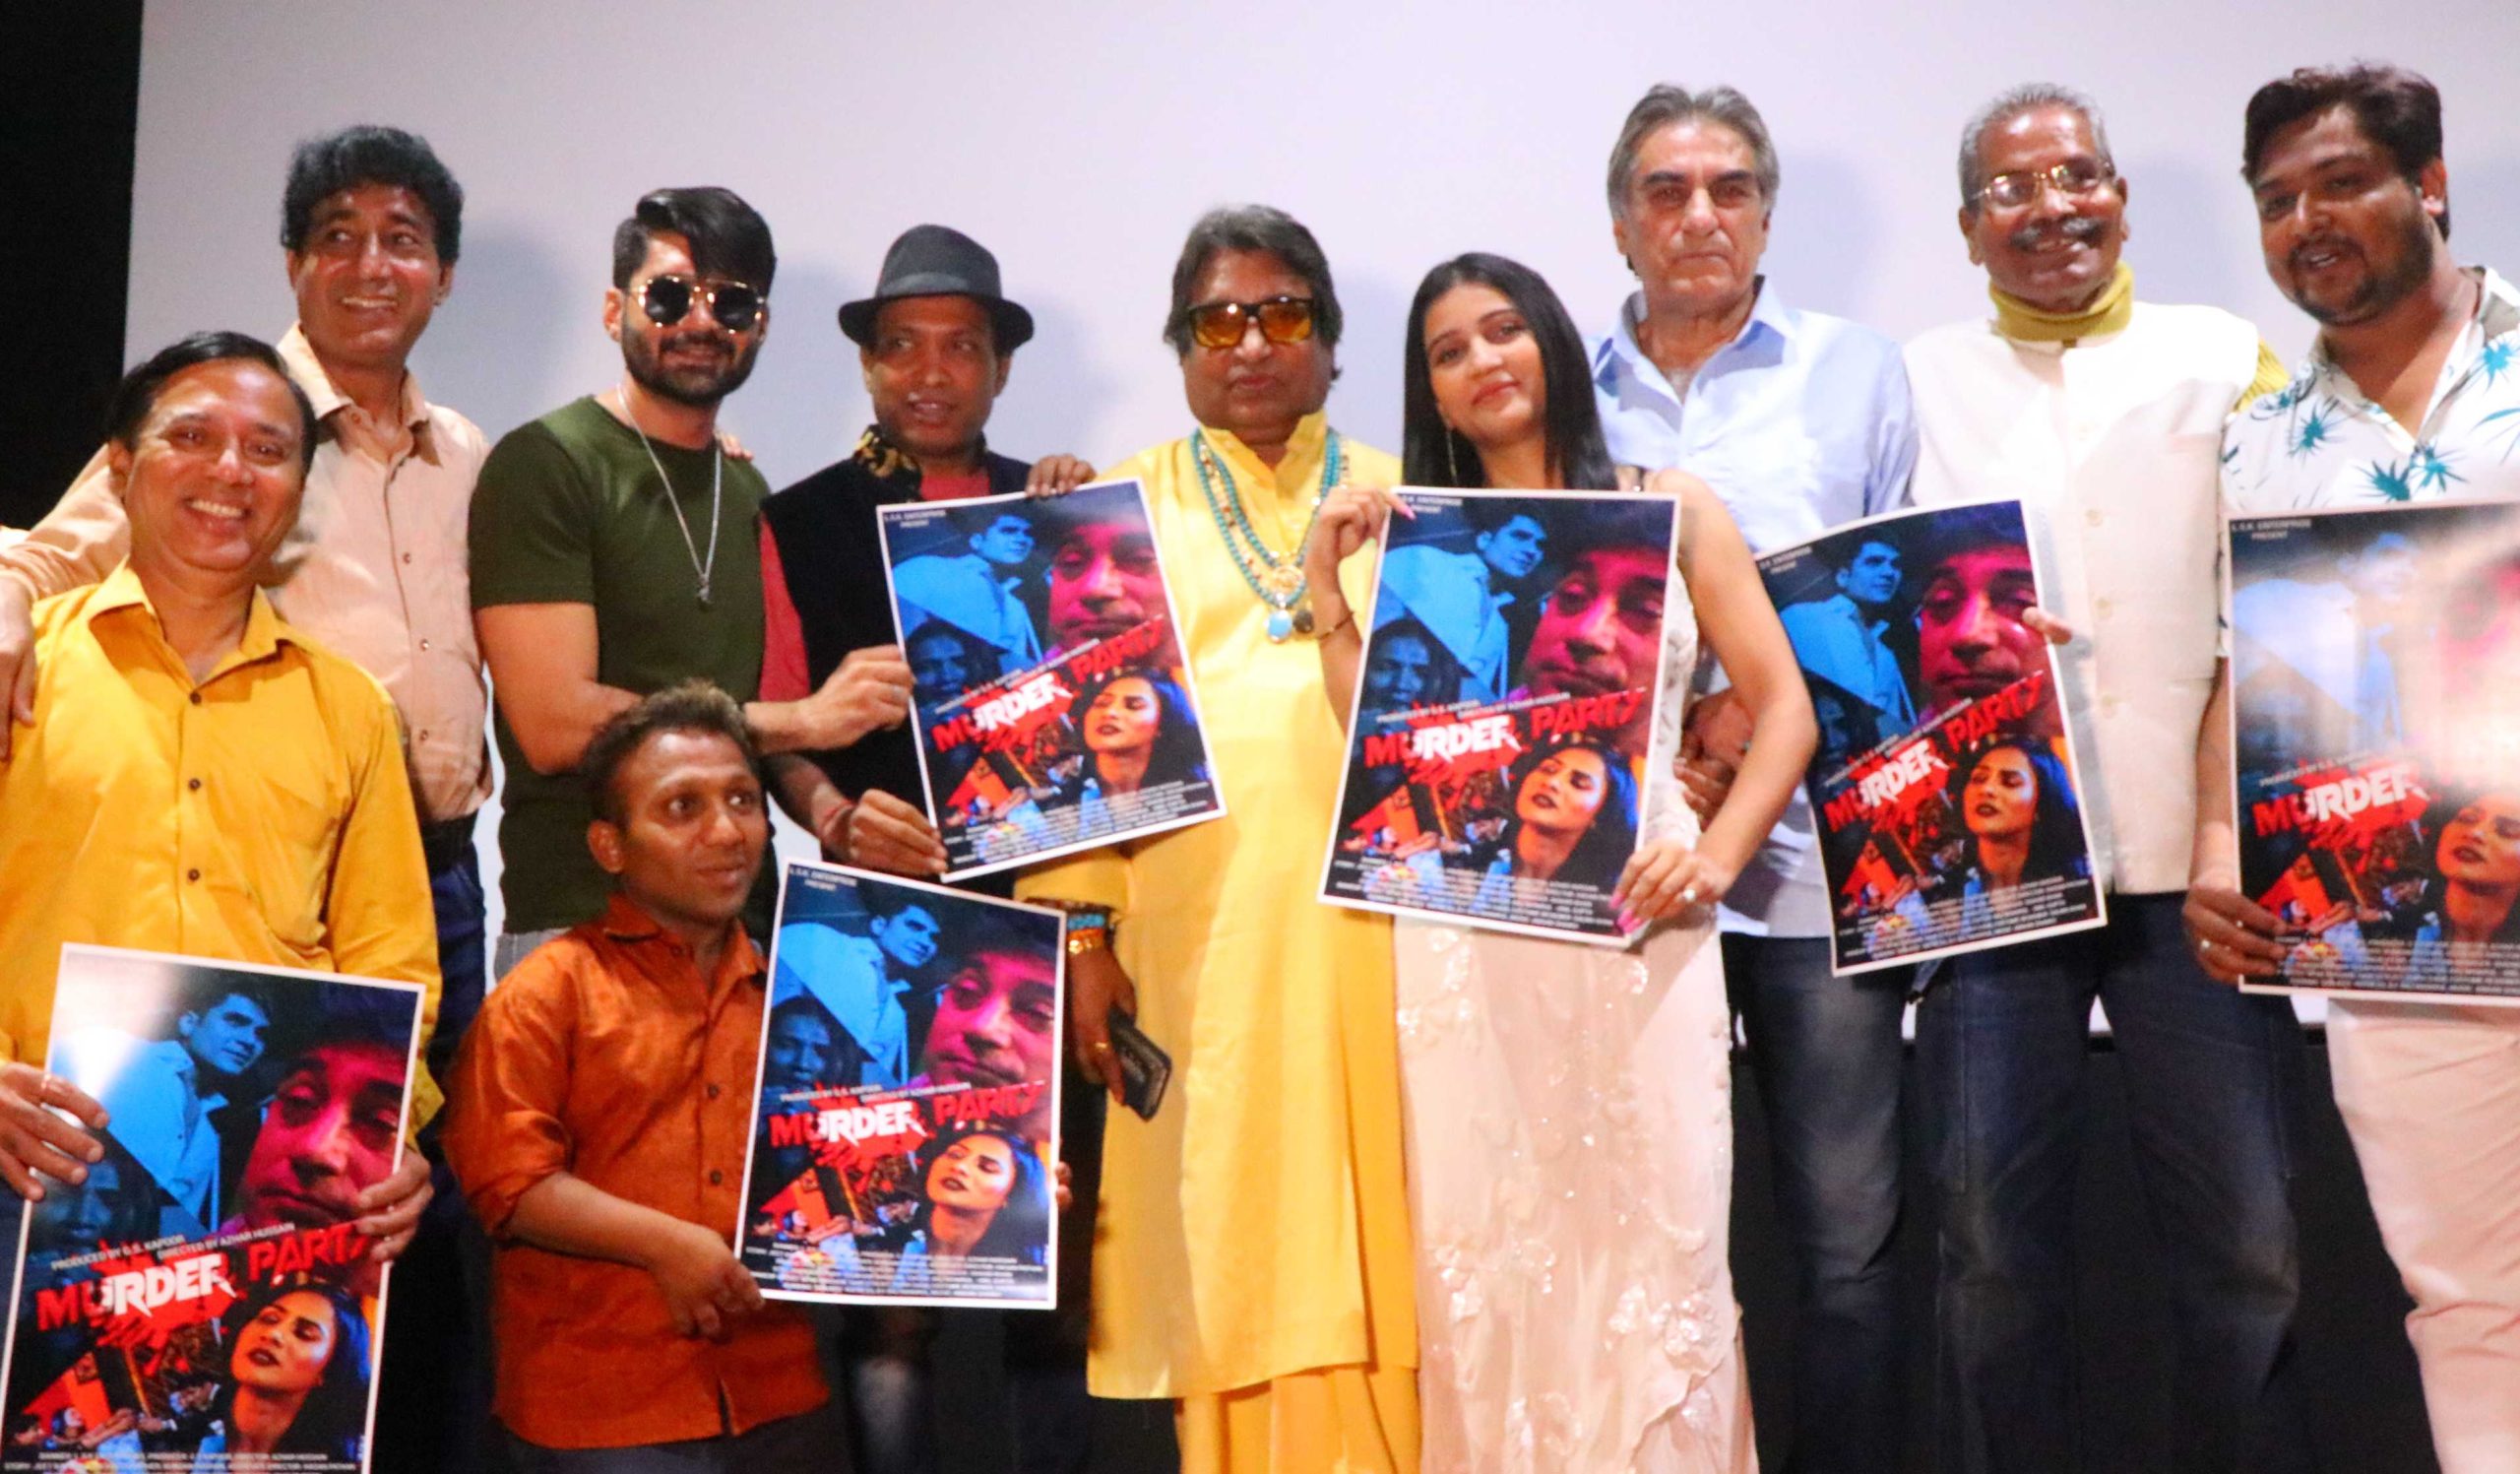 Special screening of short film “Murder Party” featuring actors Jeet Kapoor, Sufiyan Kapadia, Rupali Sharma